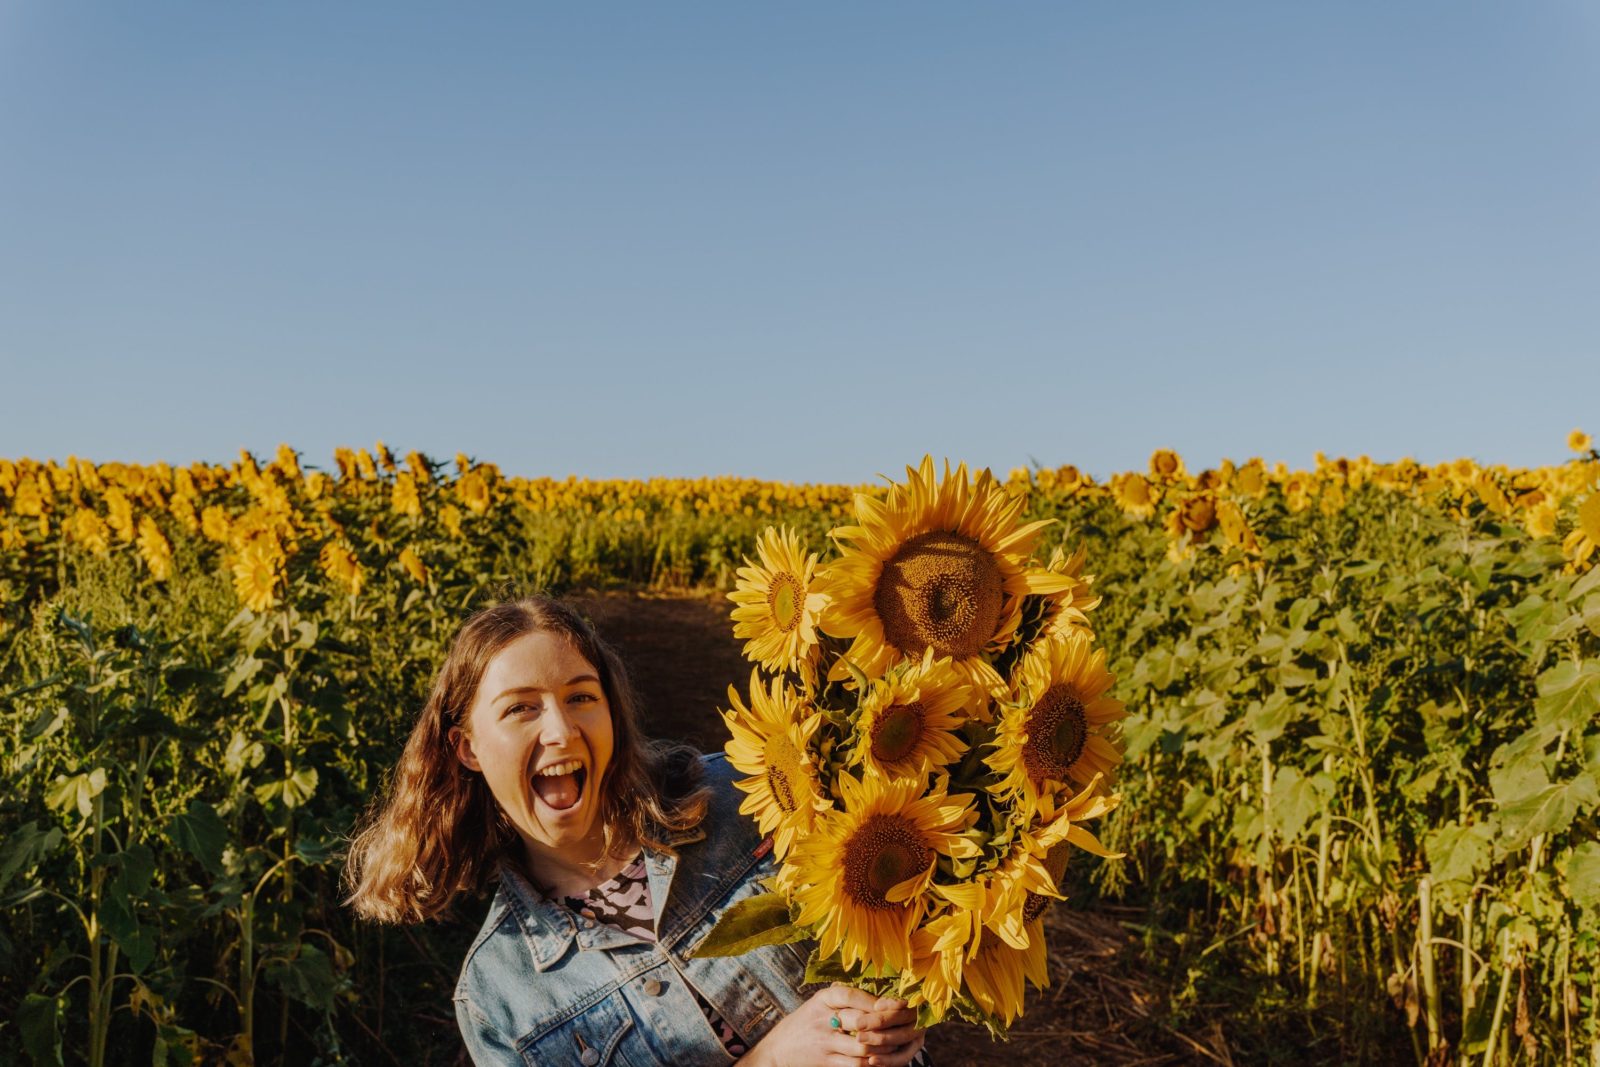 Lady in Sunflower Field Holding Flowers